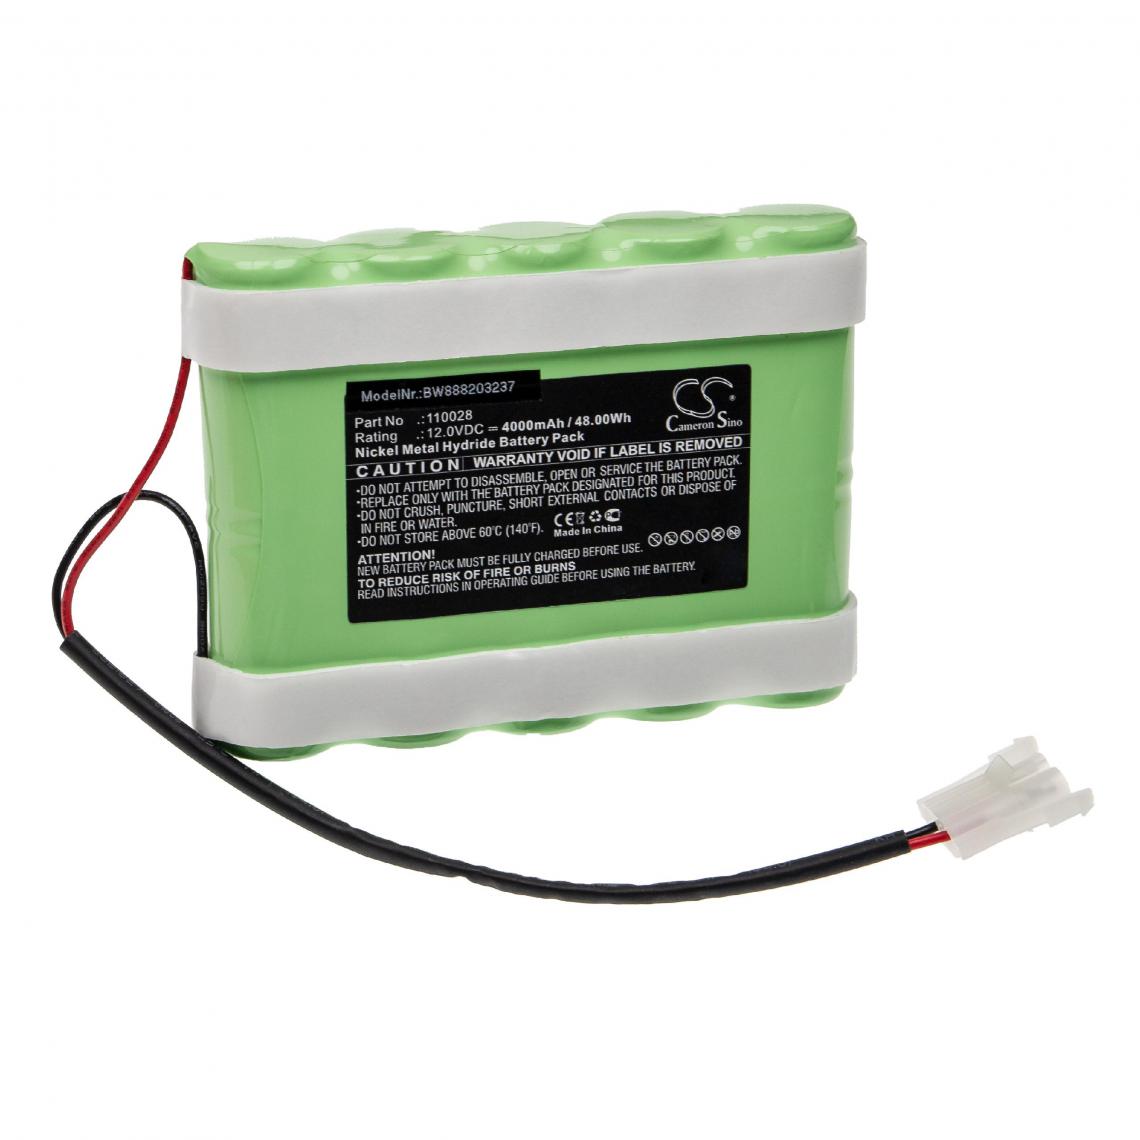 Vhbw - vhbw Batterie compatible avec Hellige Monitor Servomed SMS181, SMS182 appareil médical (4000mAh, 12V, NiMH) - Piles spécifiques